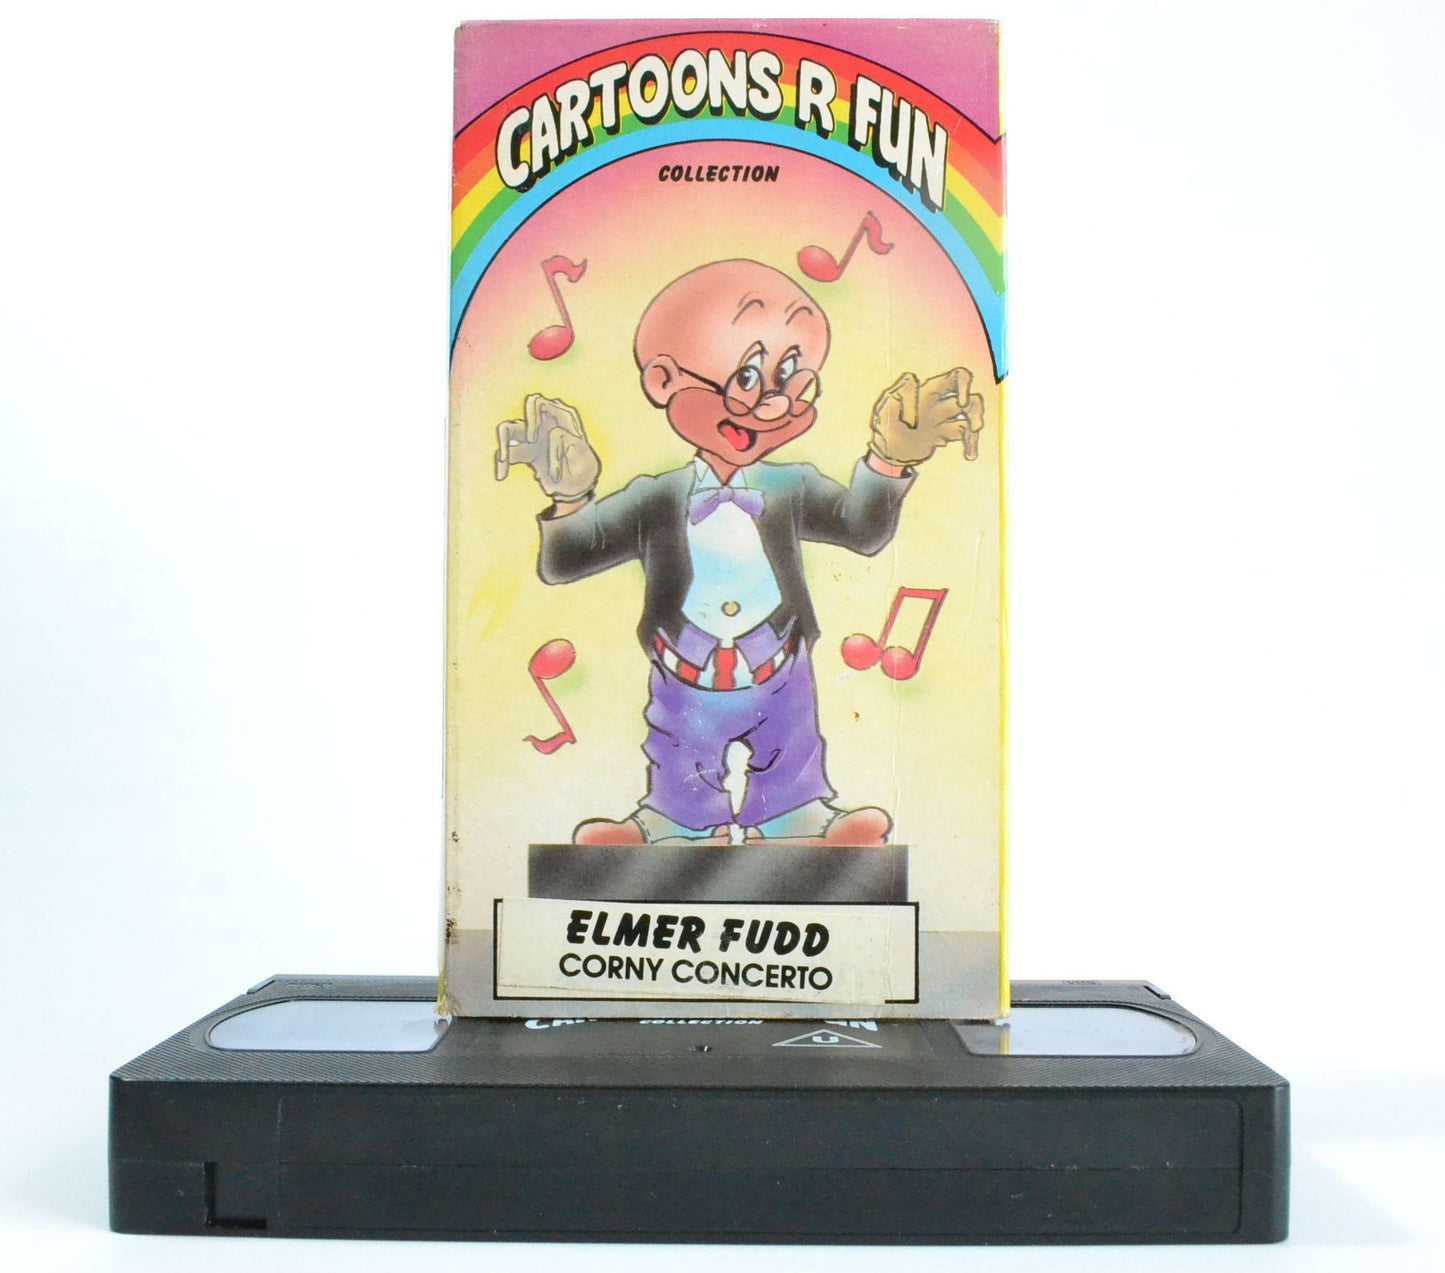 Elmer Fudd: Corny Concerto [Cartoons R Fun Collection] Children (1990 Print) VHS-